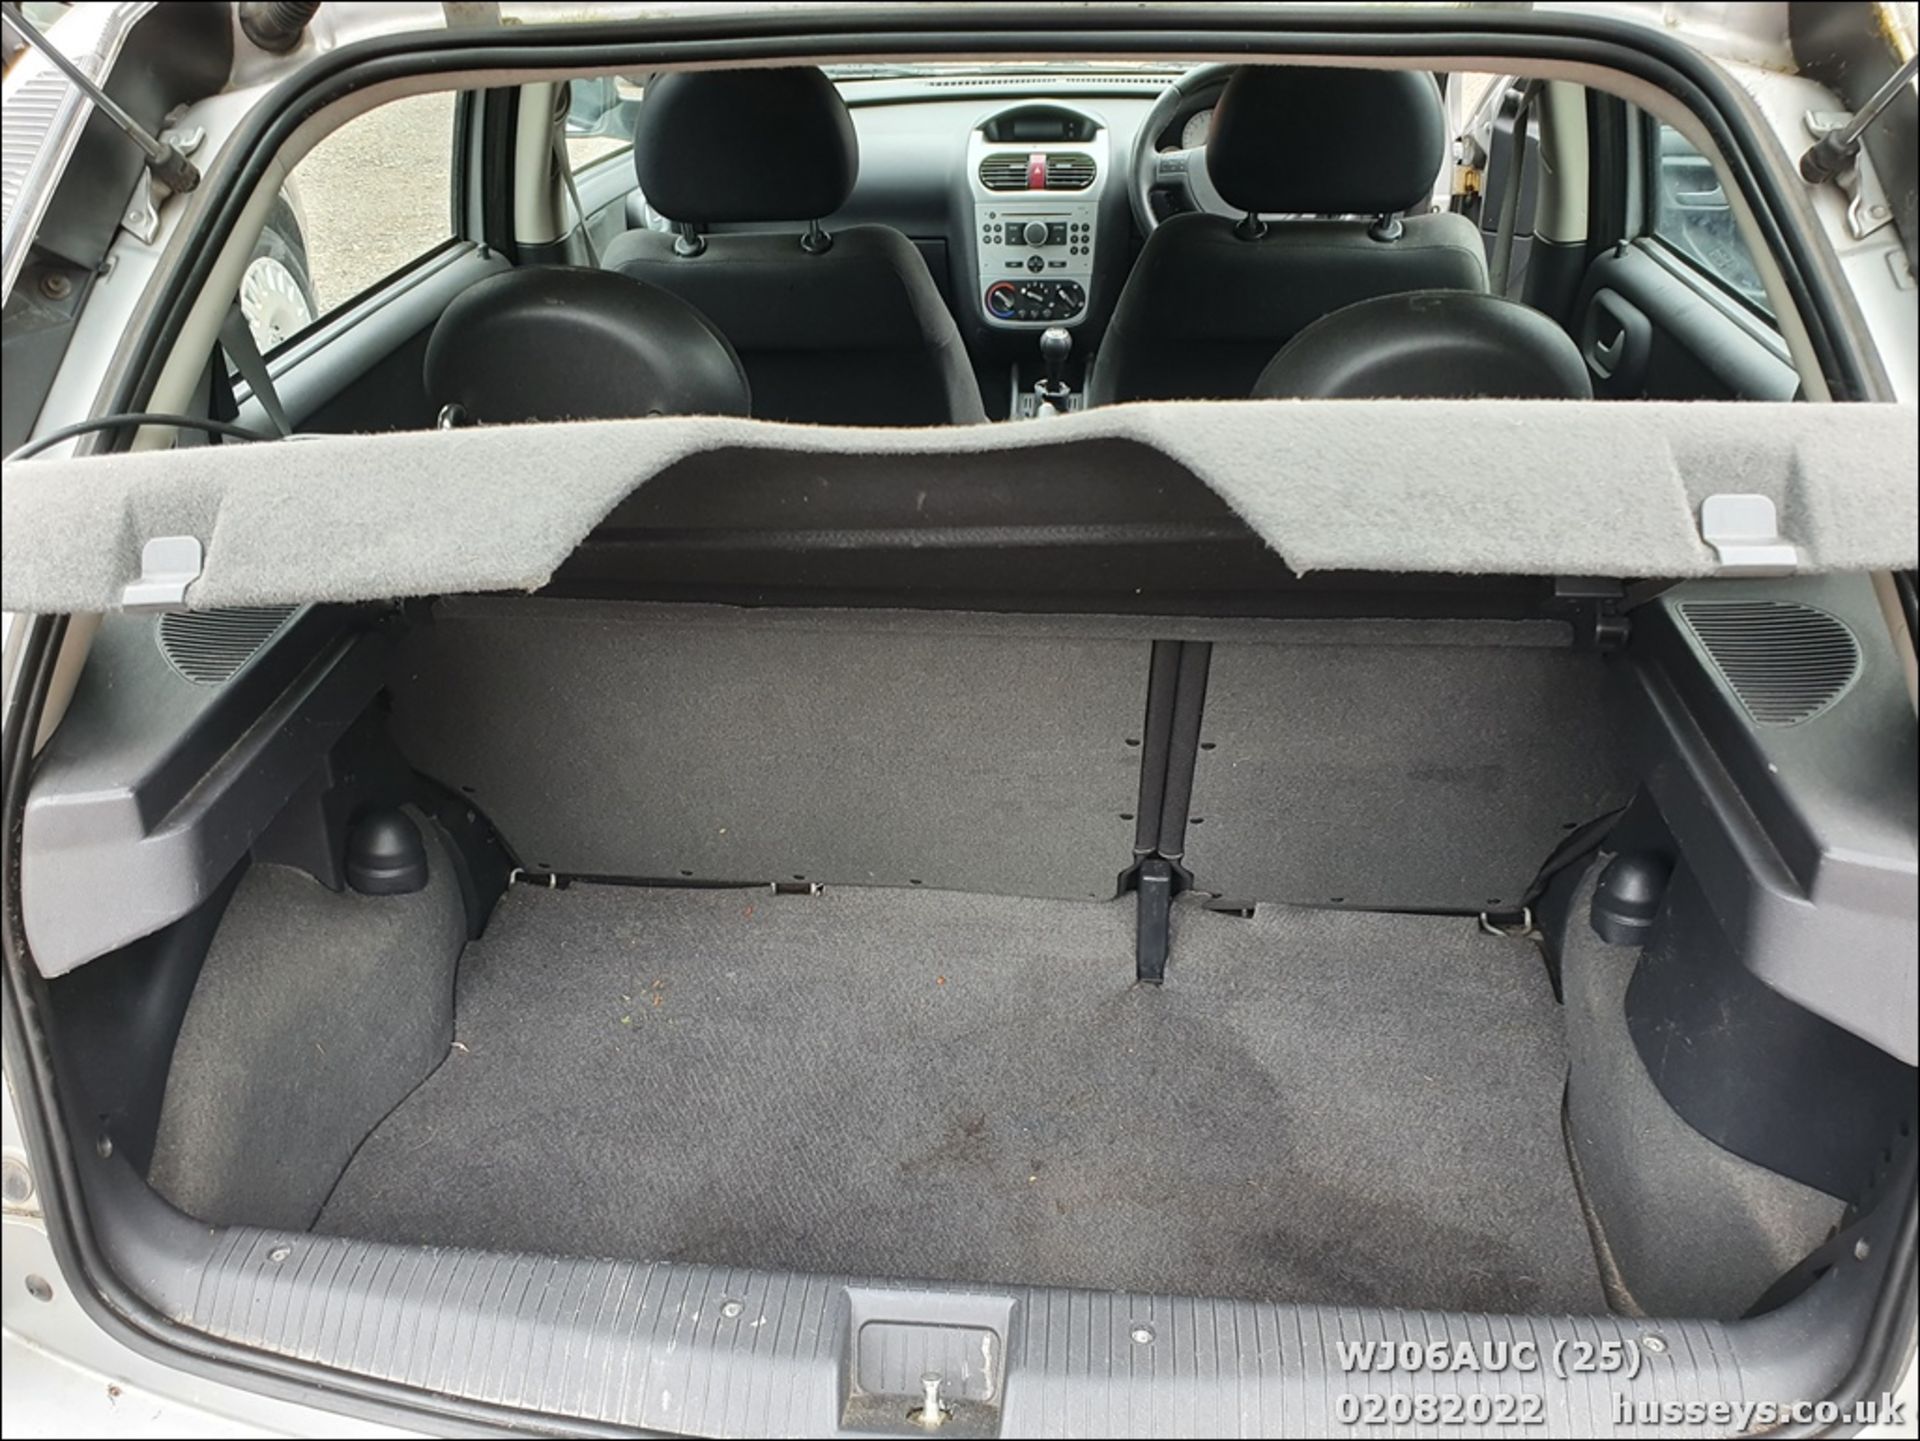 06/06 VAUXHALL CORSA ACTIVE CDTI - 1248cc 5dr Hatchback (Silver, 109k) - Image 26 of 27